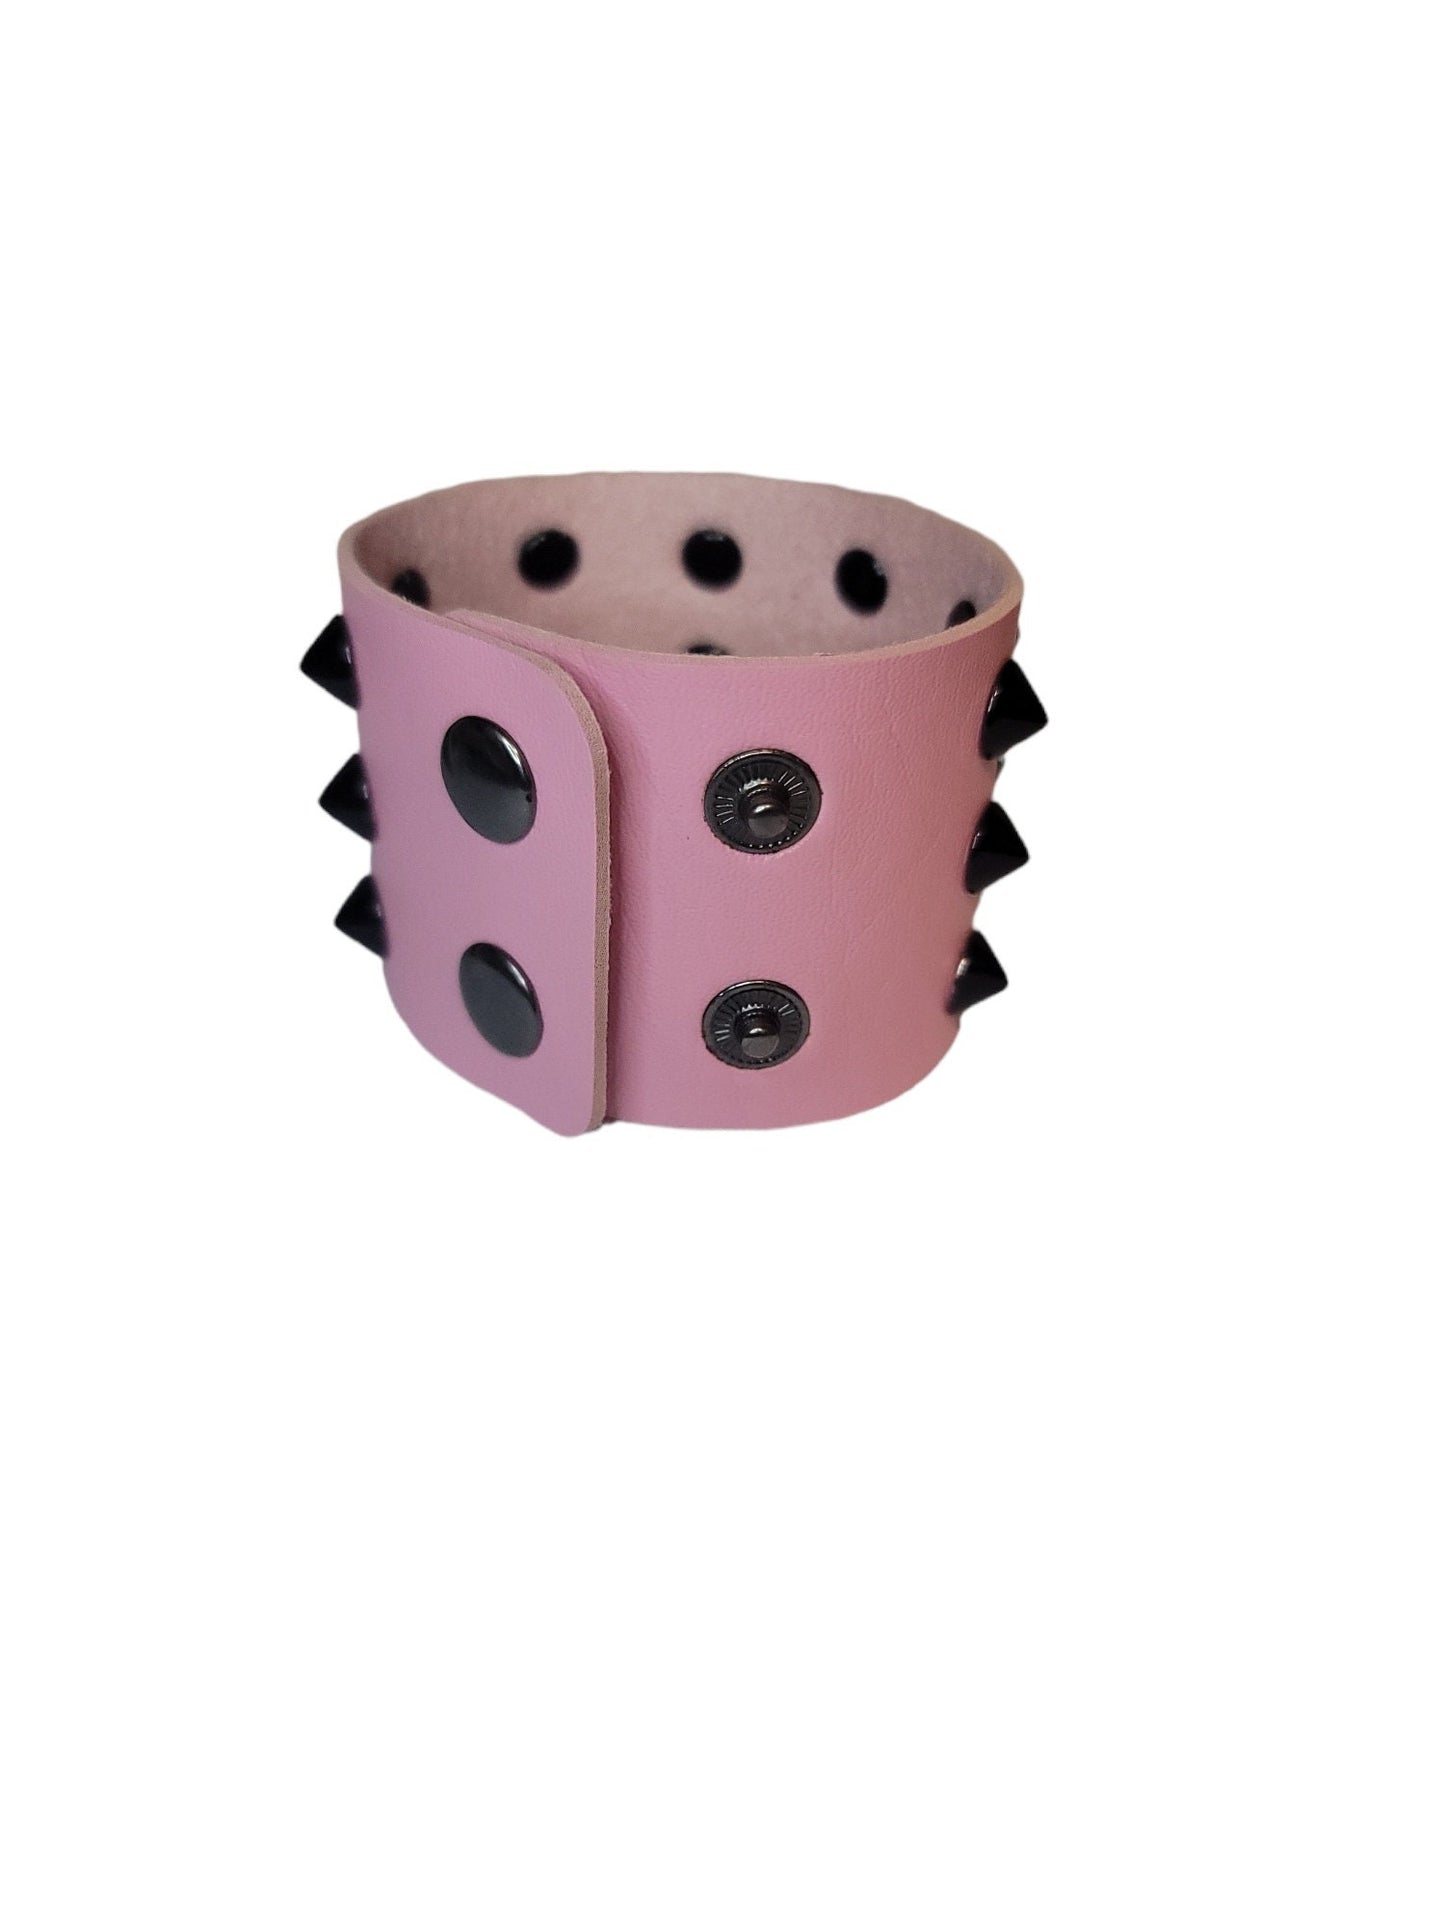 Pink spiked punk rock bracelet wrist cuff